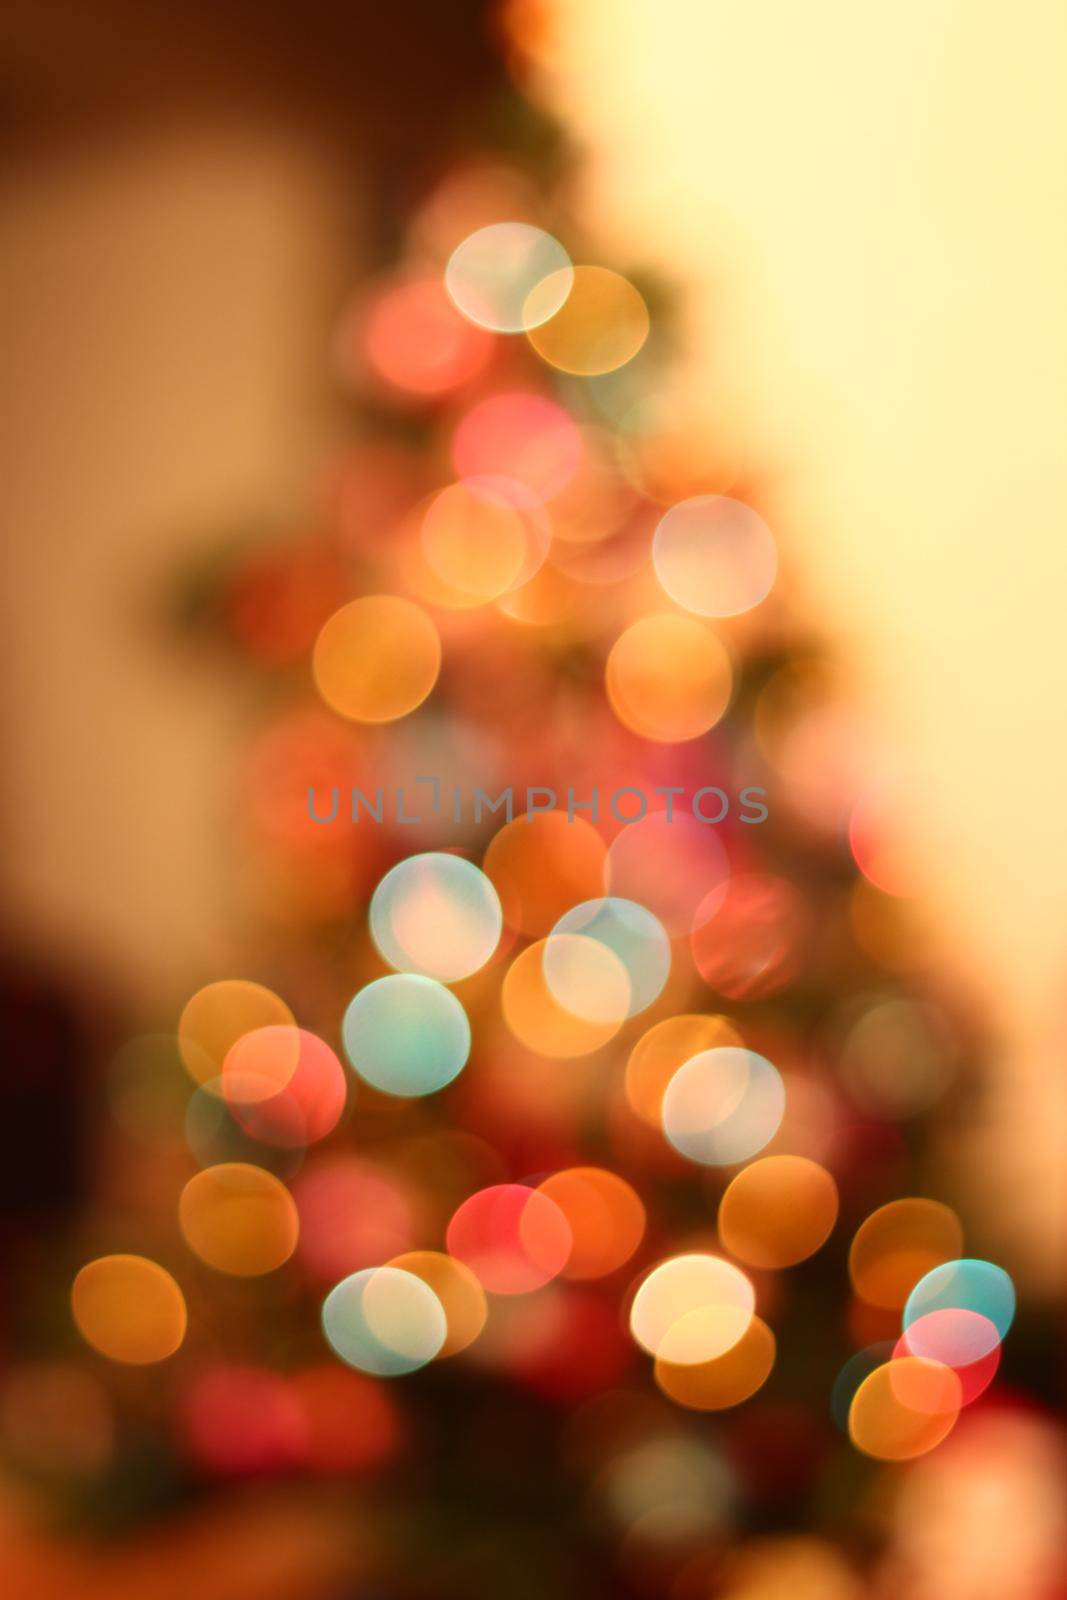 Christmas lights on xmas tree defocused. Holiday bokeh background